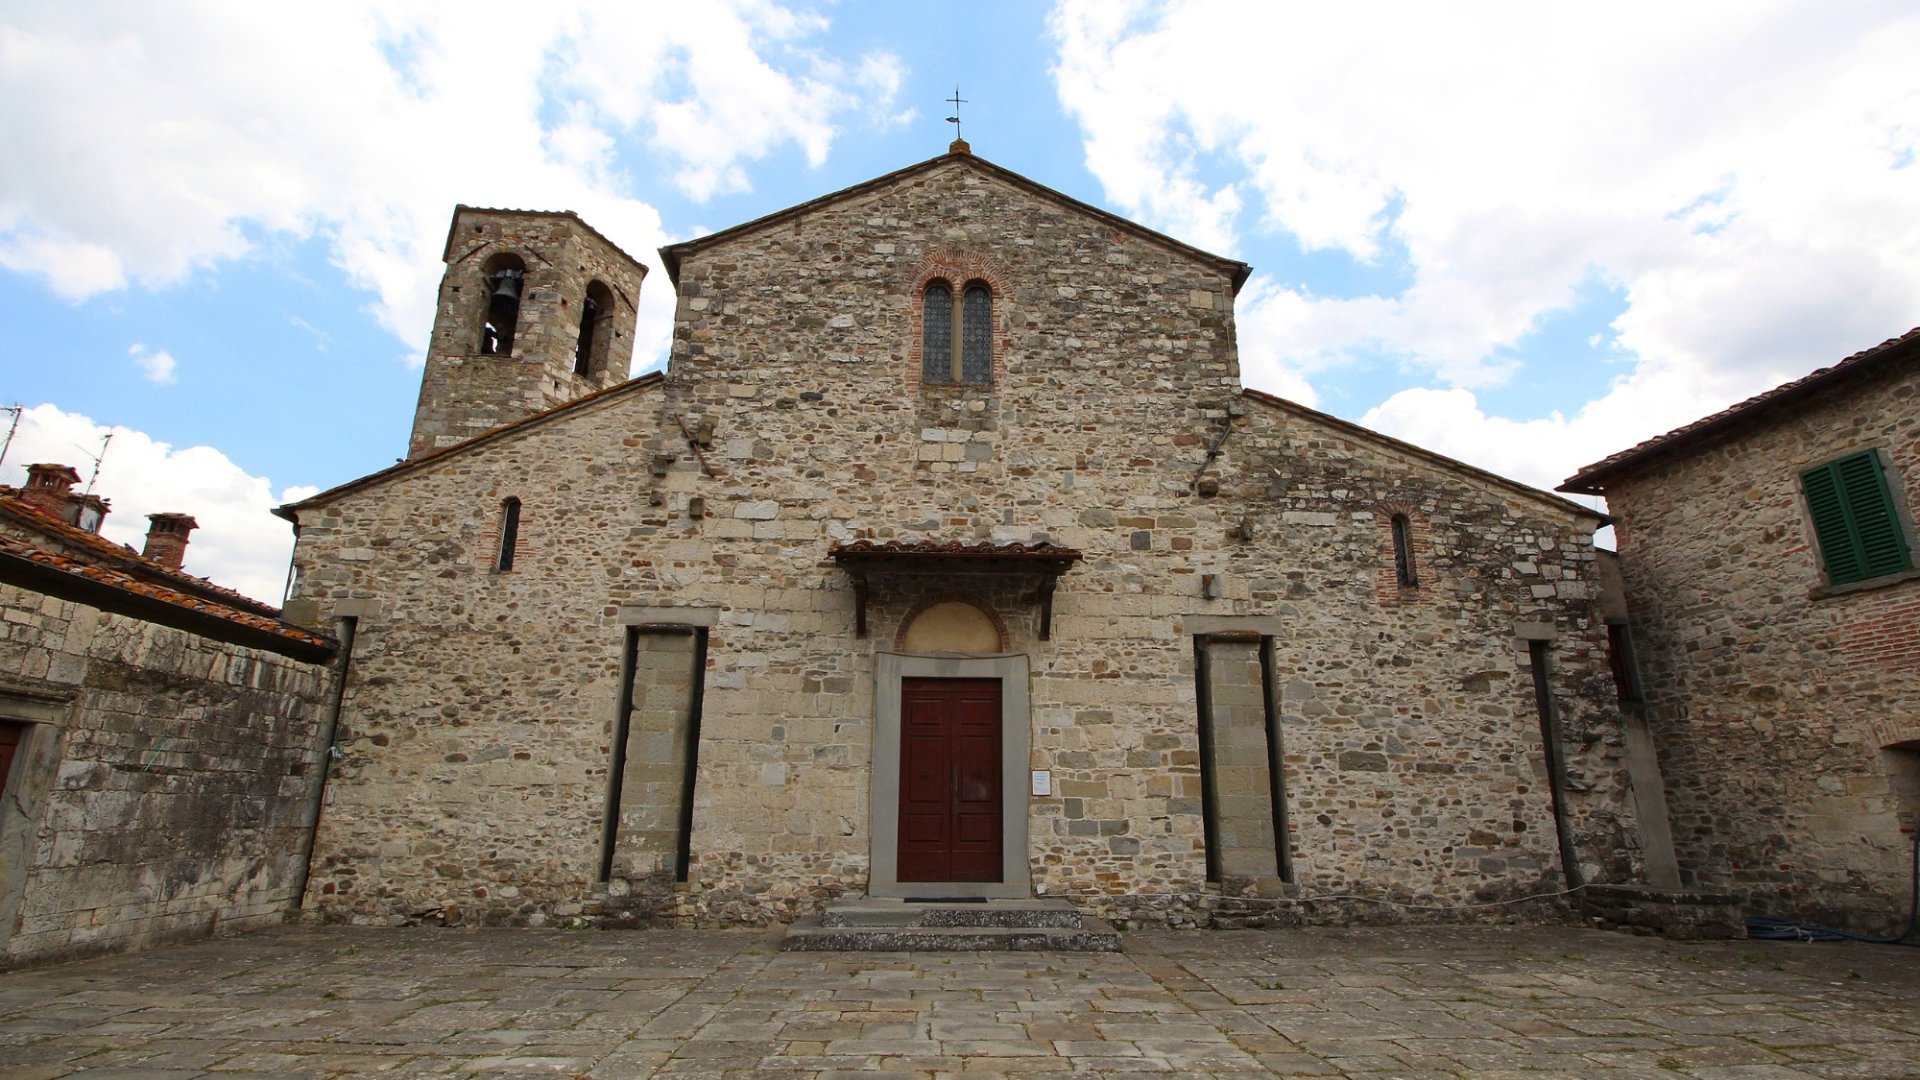 The Pieve di Sant’Antonino a Socana